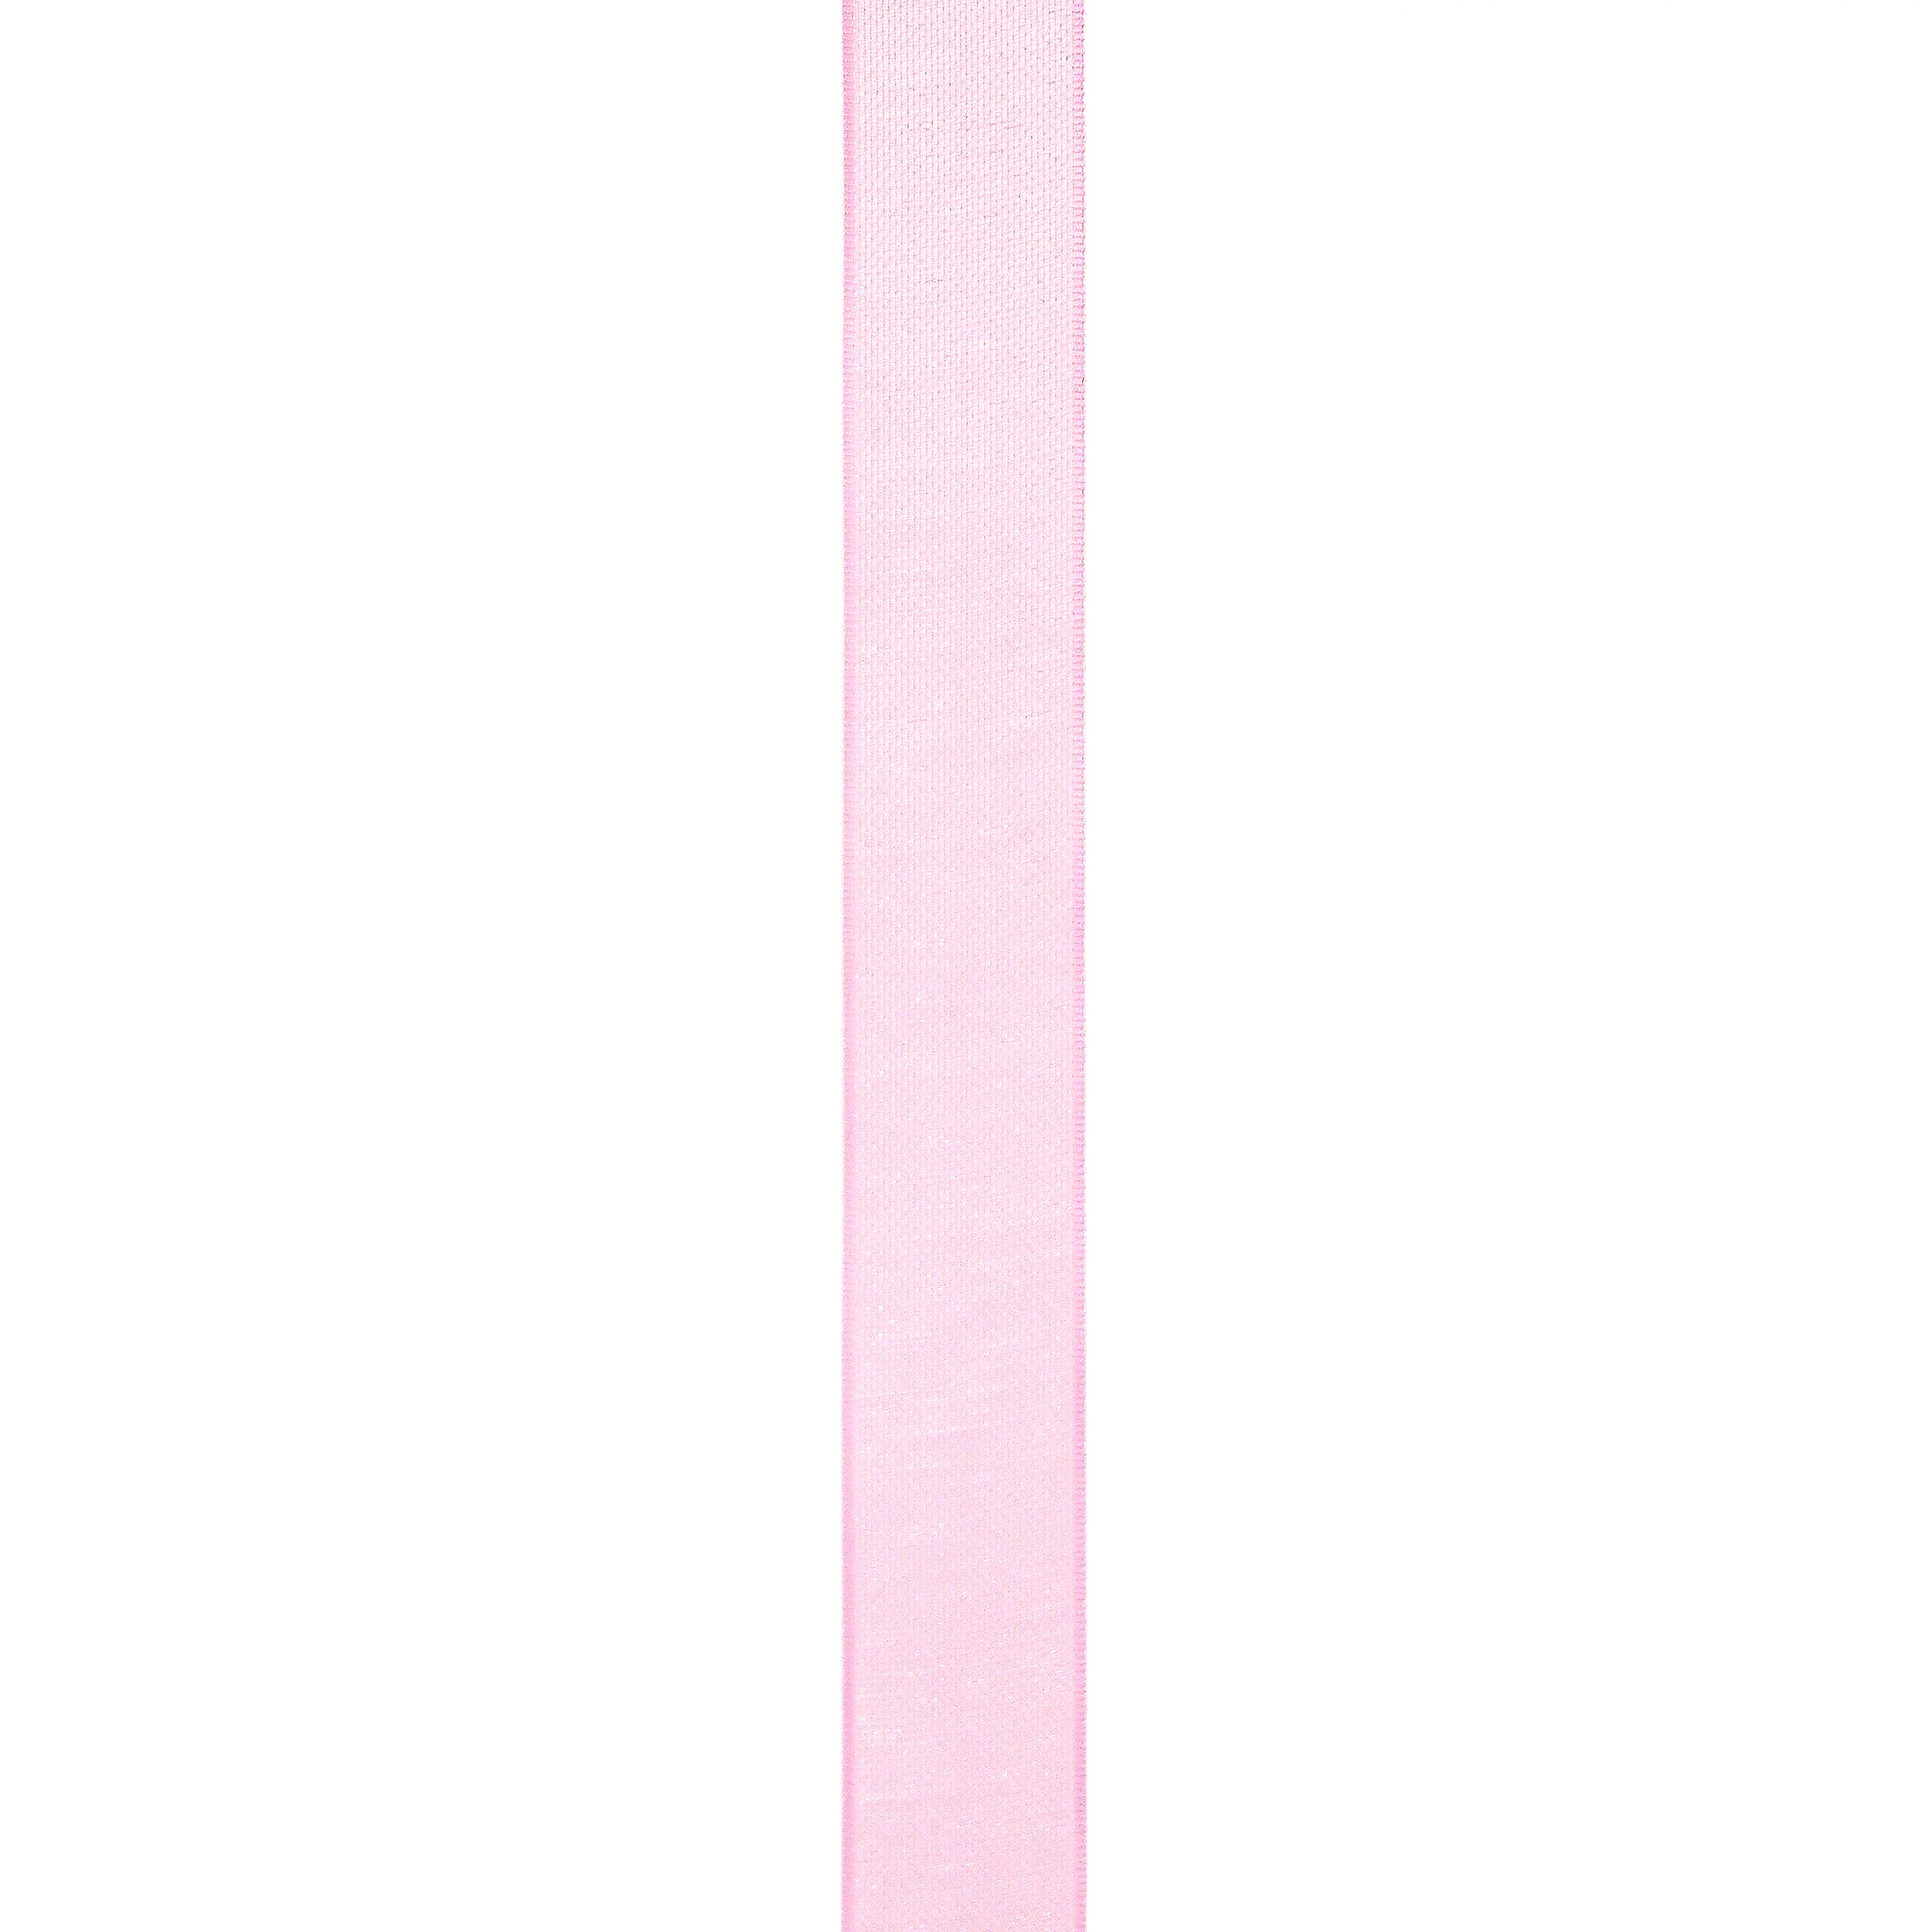  3/8 Inch Sheer Organza Ribbon 50 Yards Hot Pink Chiffon  Ribbon For Gift Wrapping Valentines Day Crafts Wedding Bouquet Ribbon